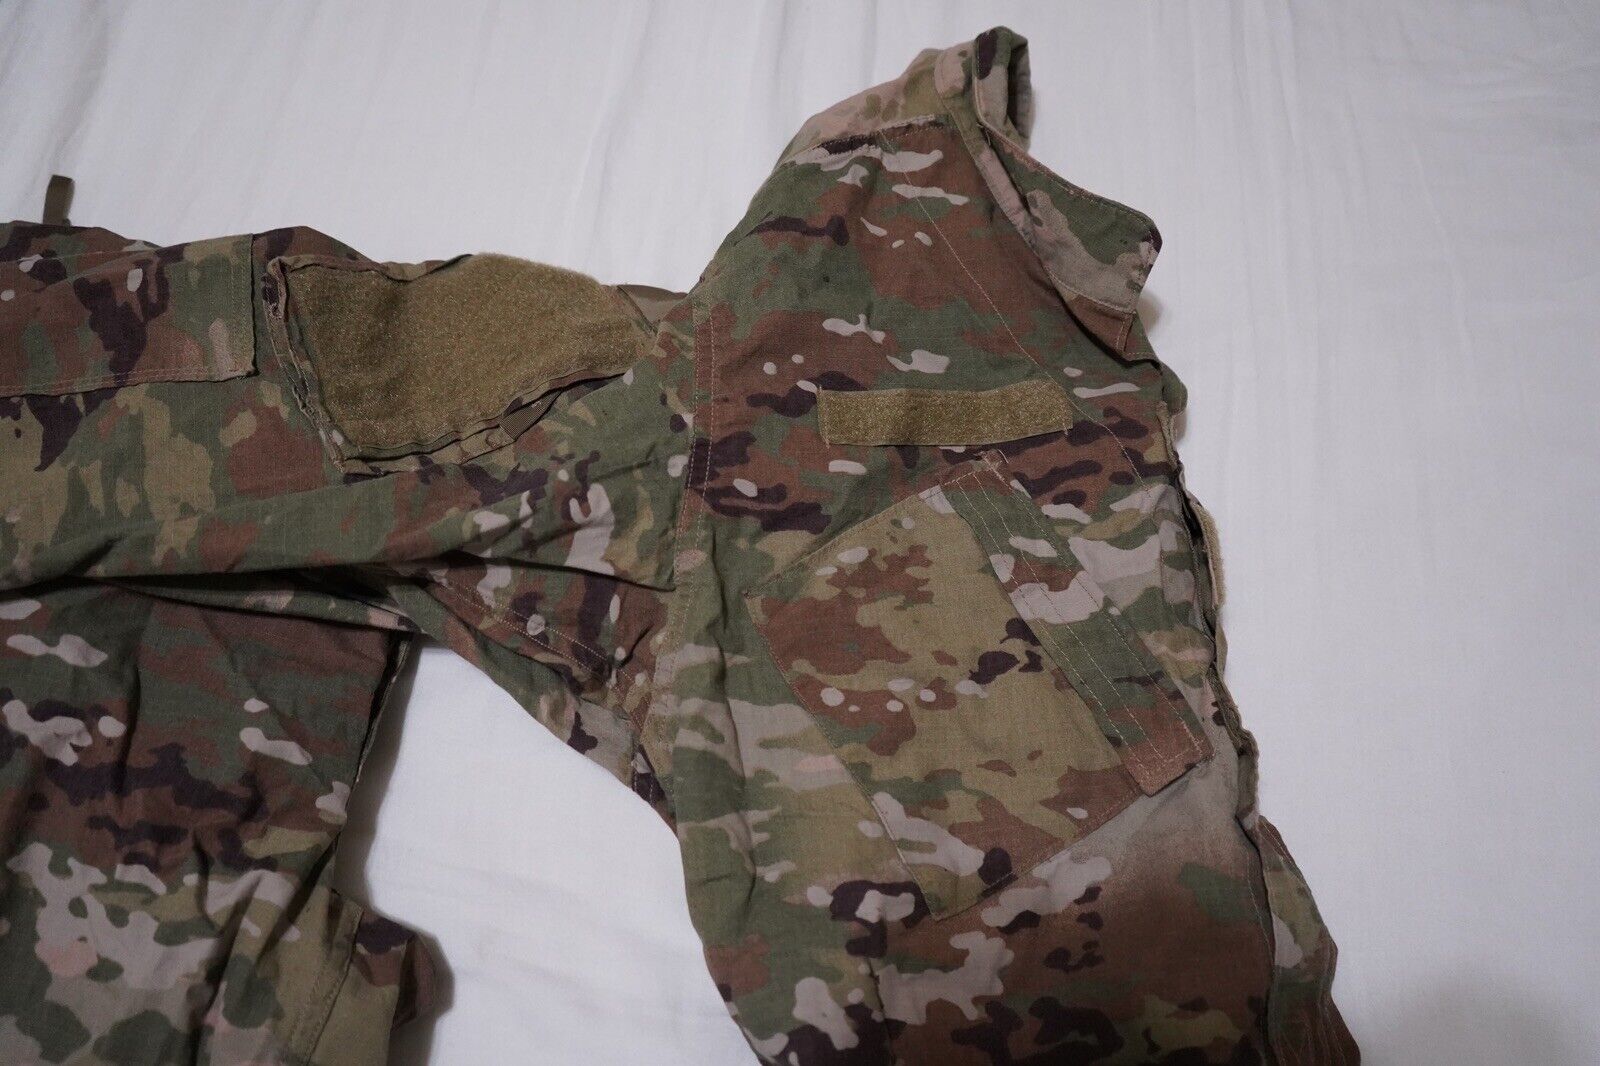 Military OCP RFI Medium Regular Uniform-4Sets Available. Flame Resistant